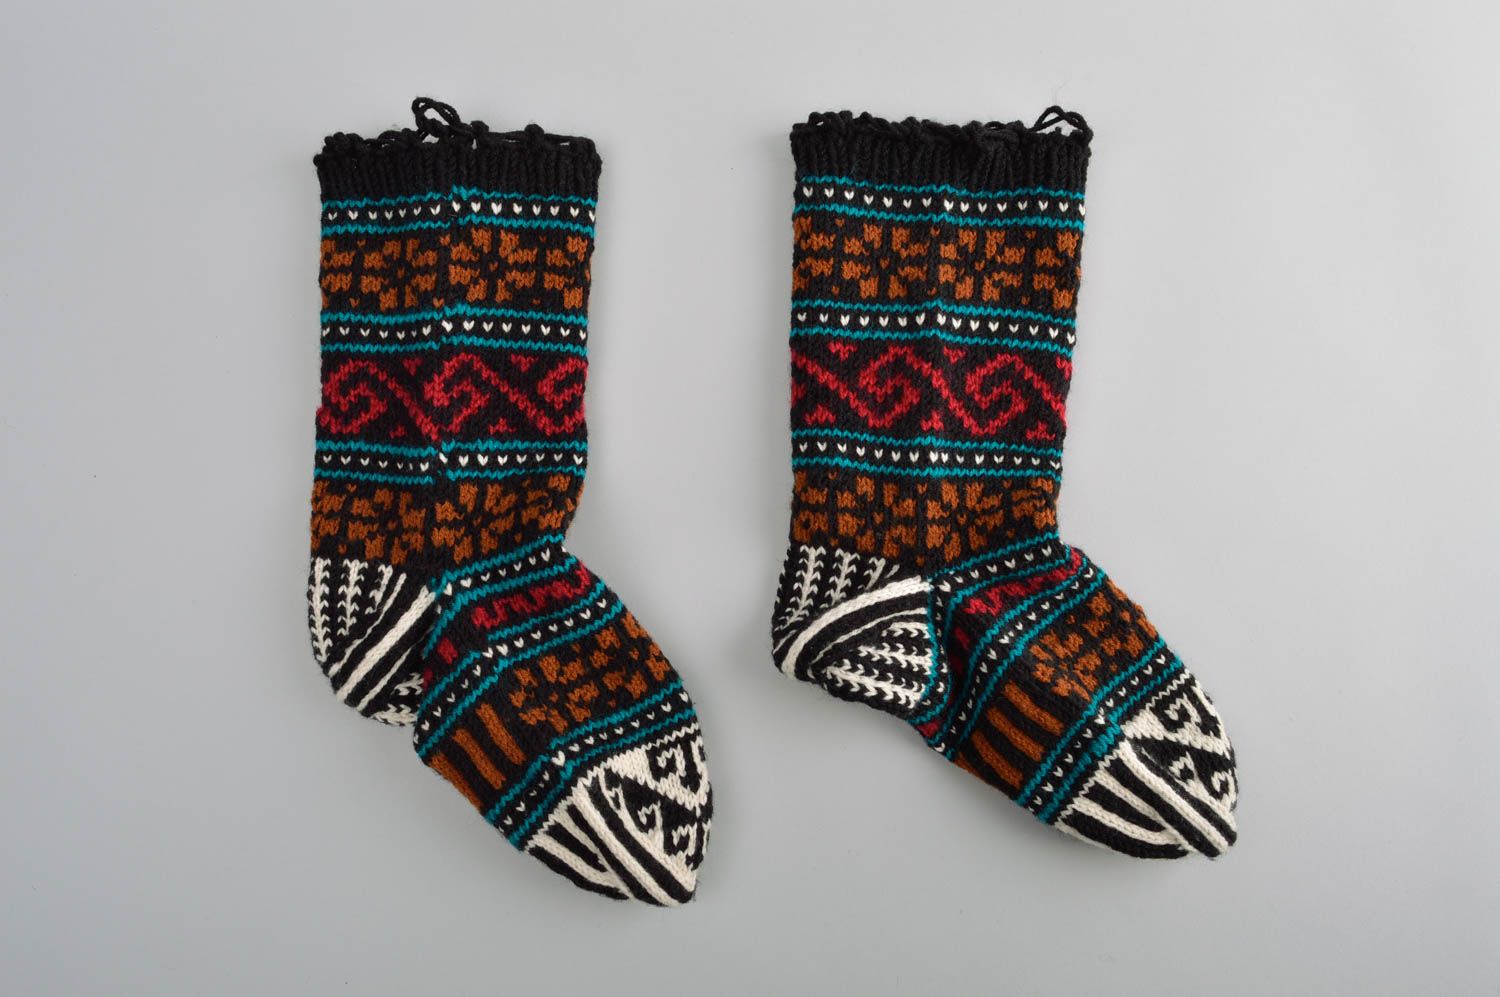 Hand-knitted socks woolen socks warm winter socks winter accessories woman socks photo 2